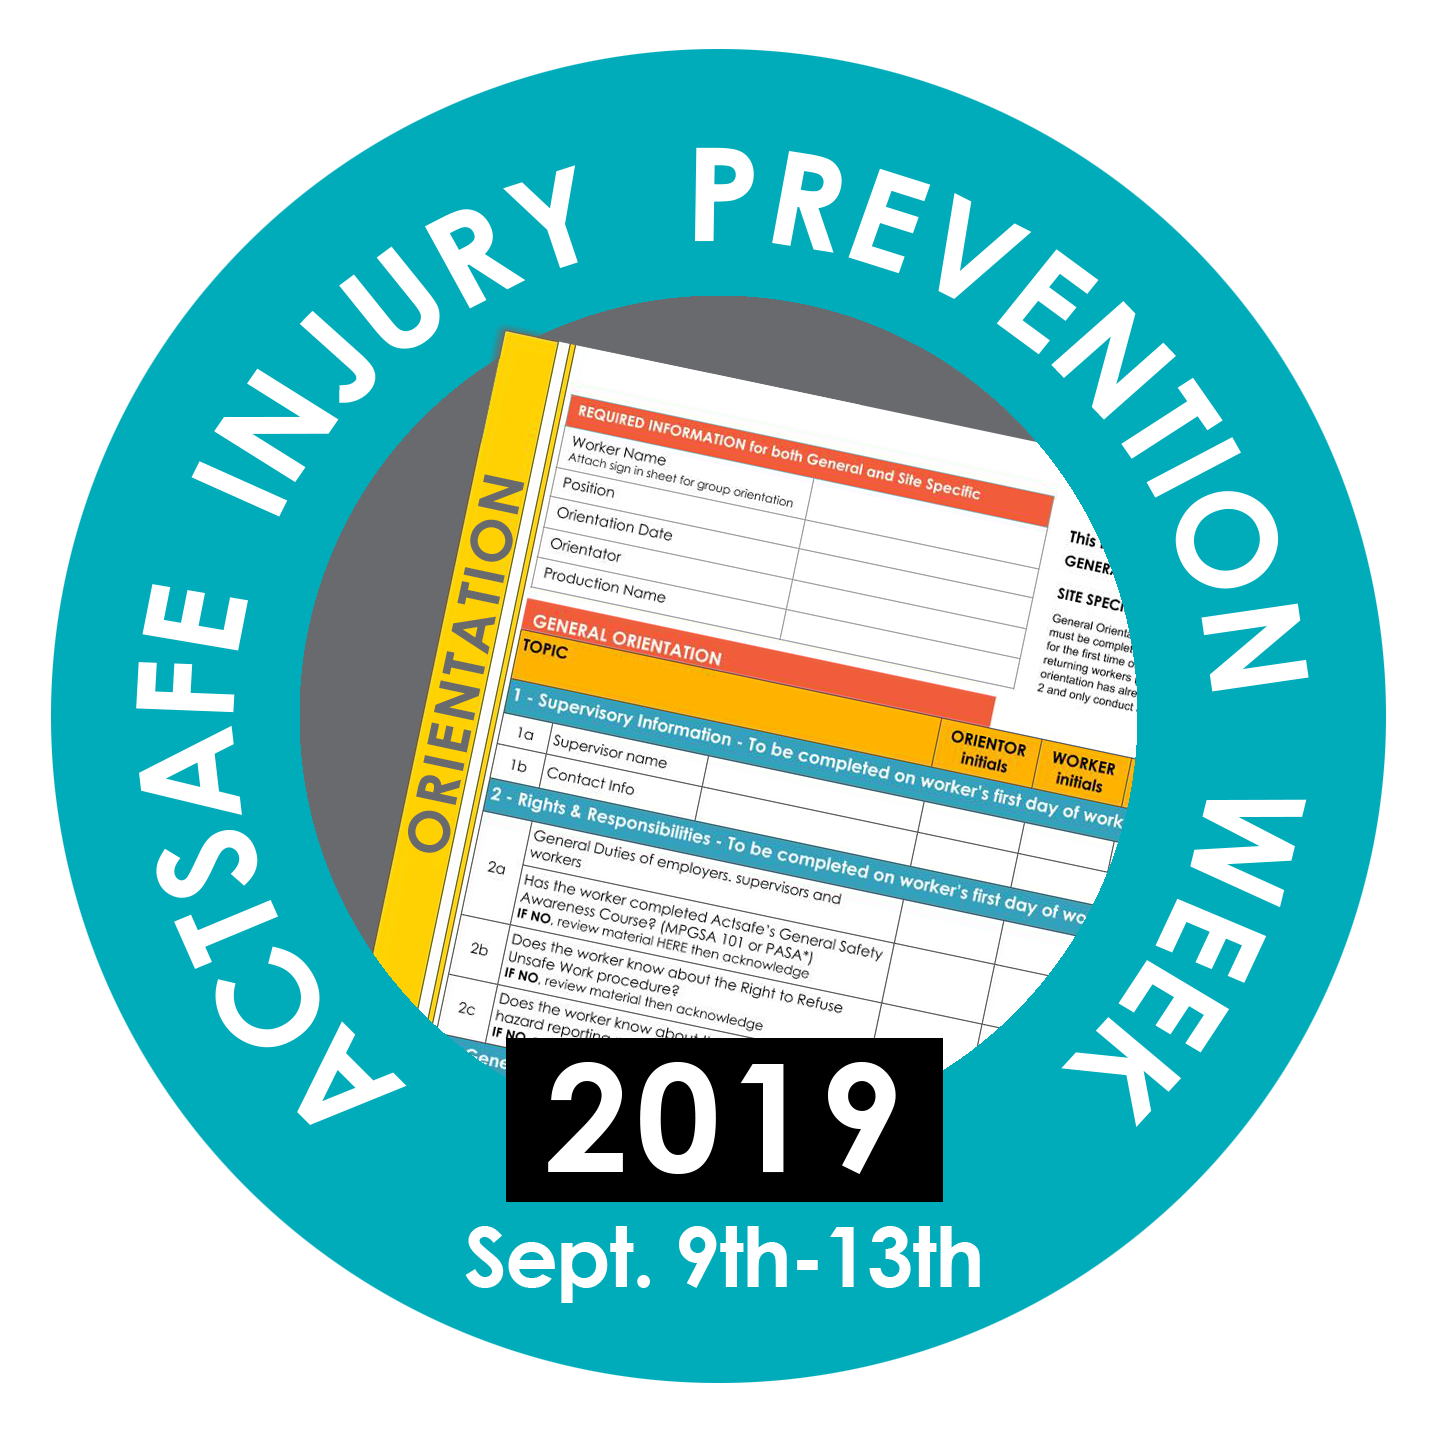 actsafe injury prevention week 2019 logo